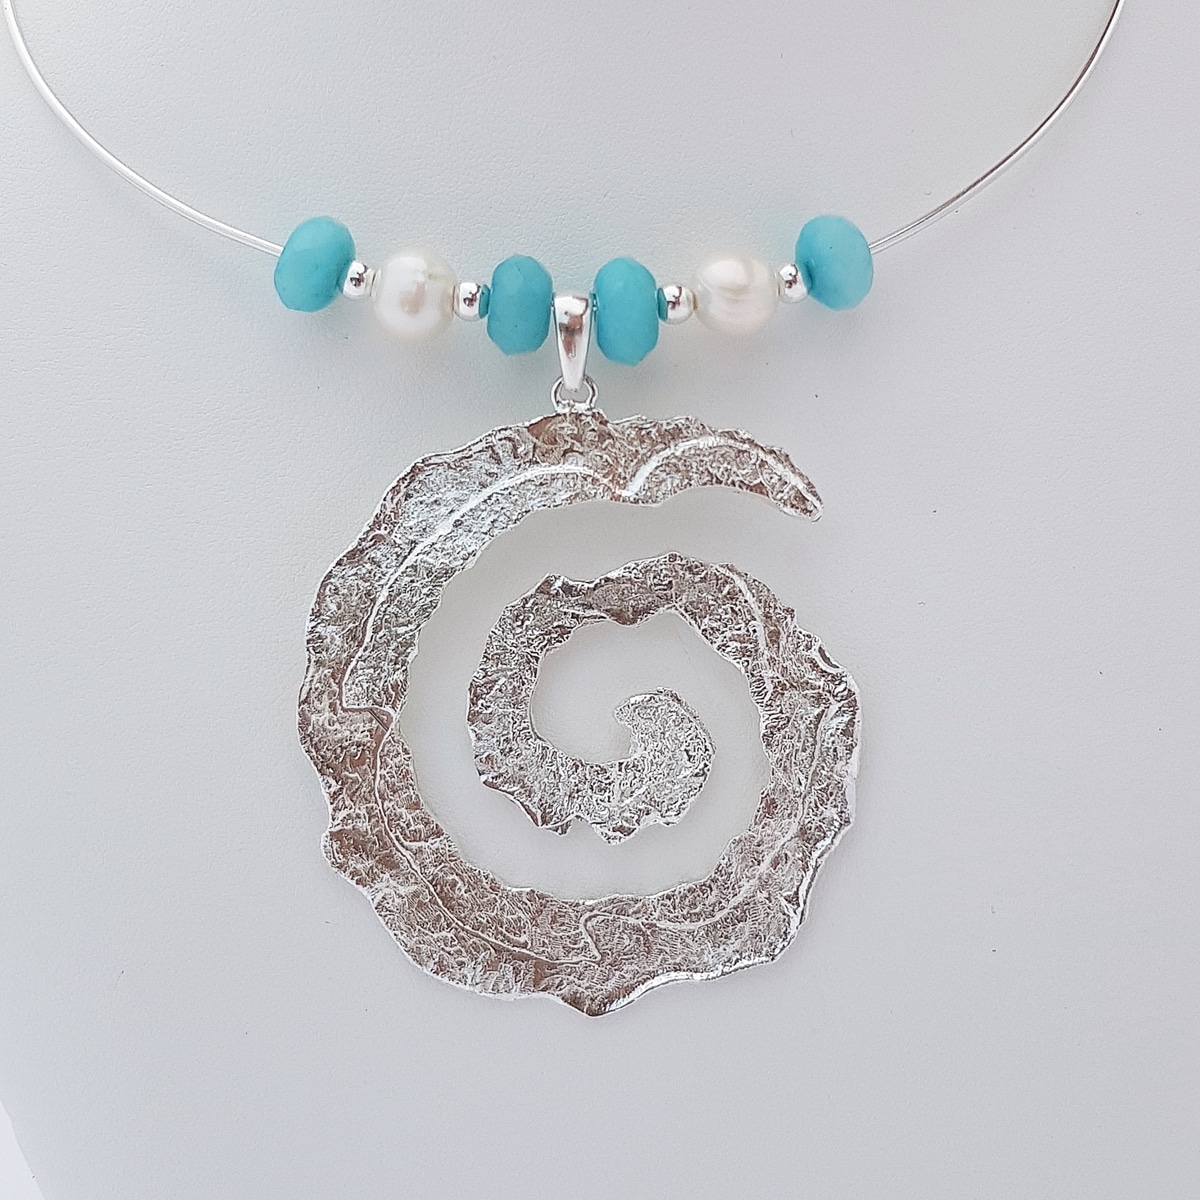 Colgante espiral de plata artesanal con ágata azul turquesa y perlas. Joyas Siliva.